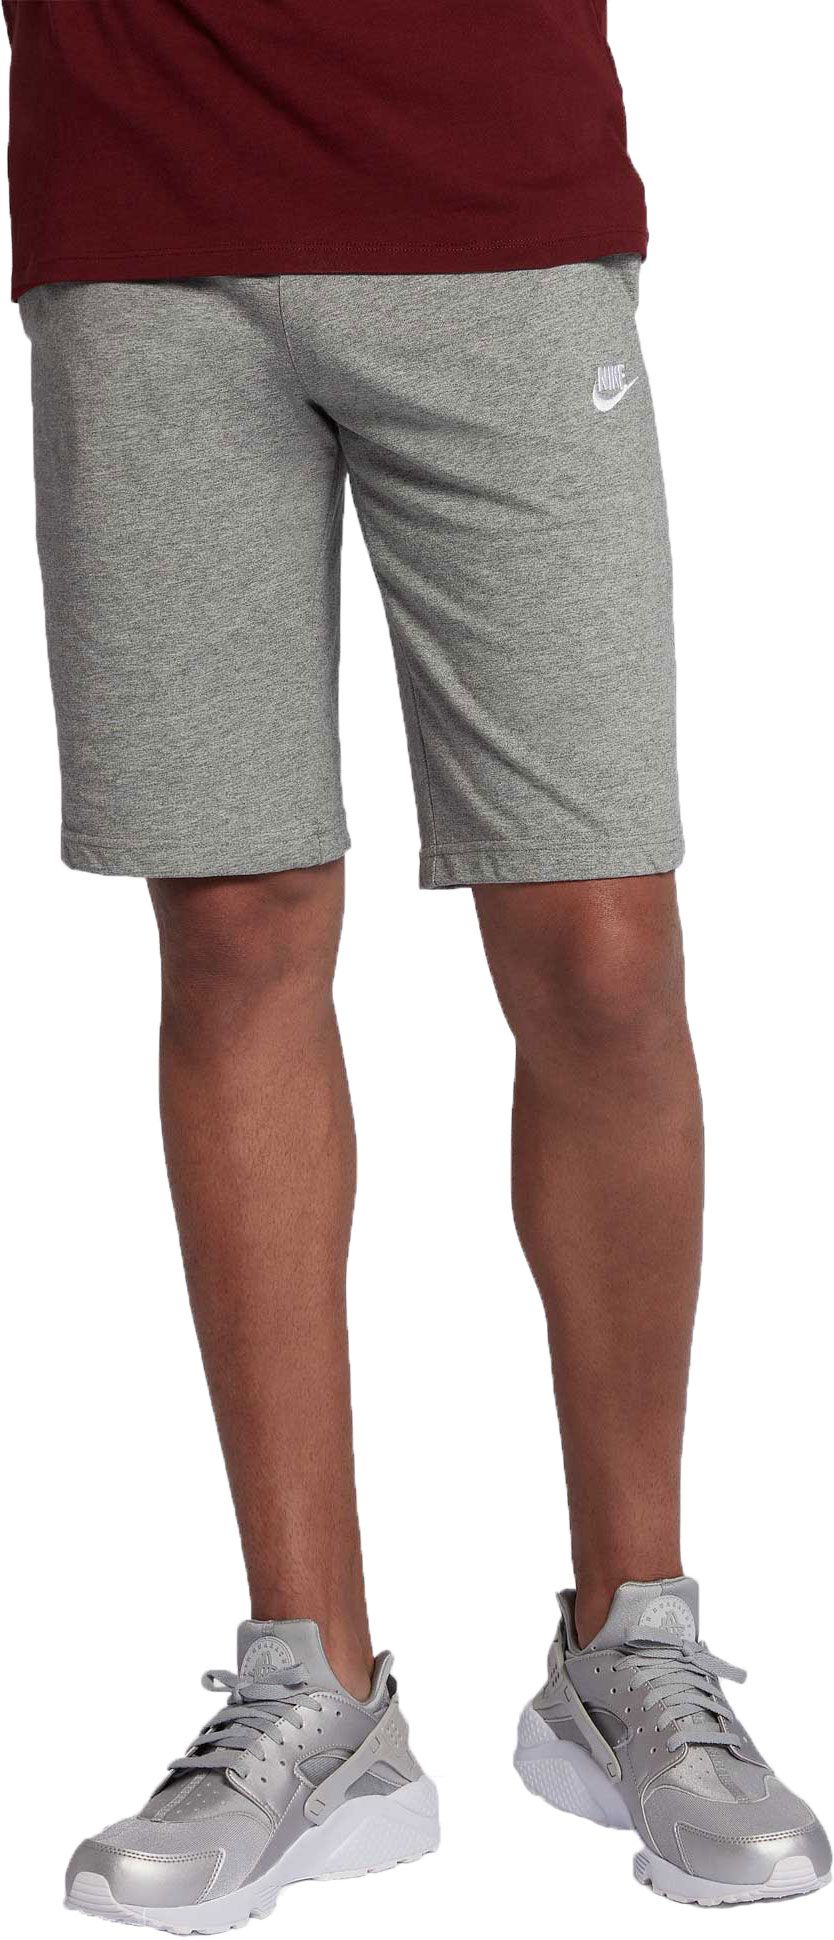 nike grey sweat shorts mens